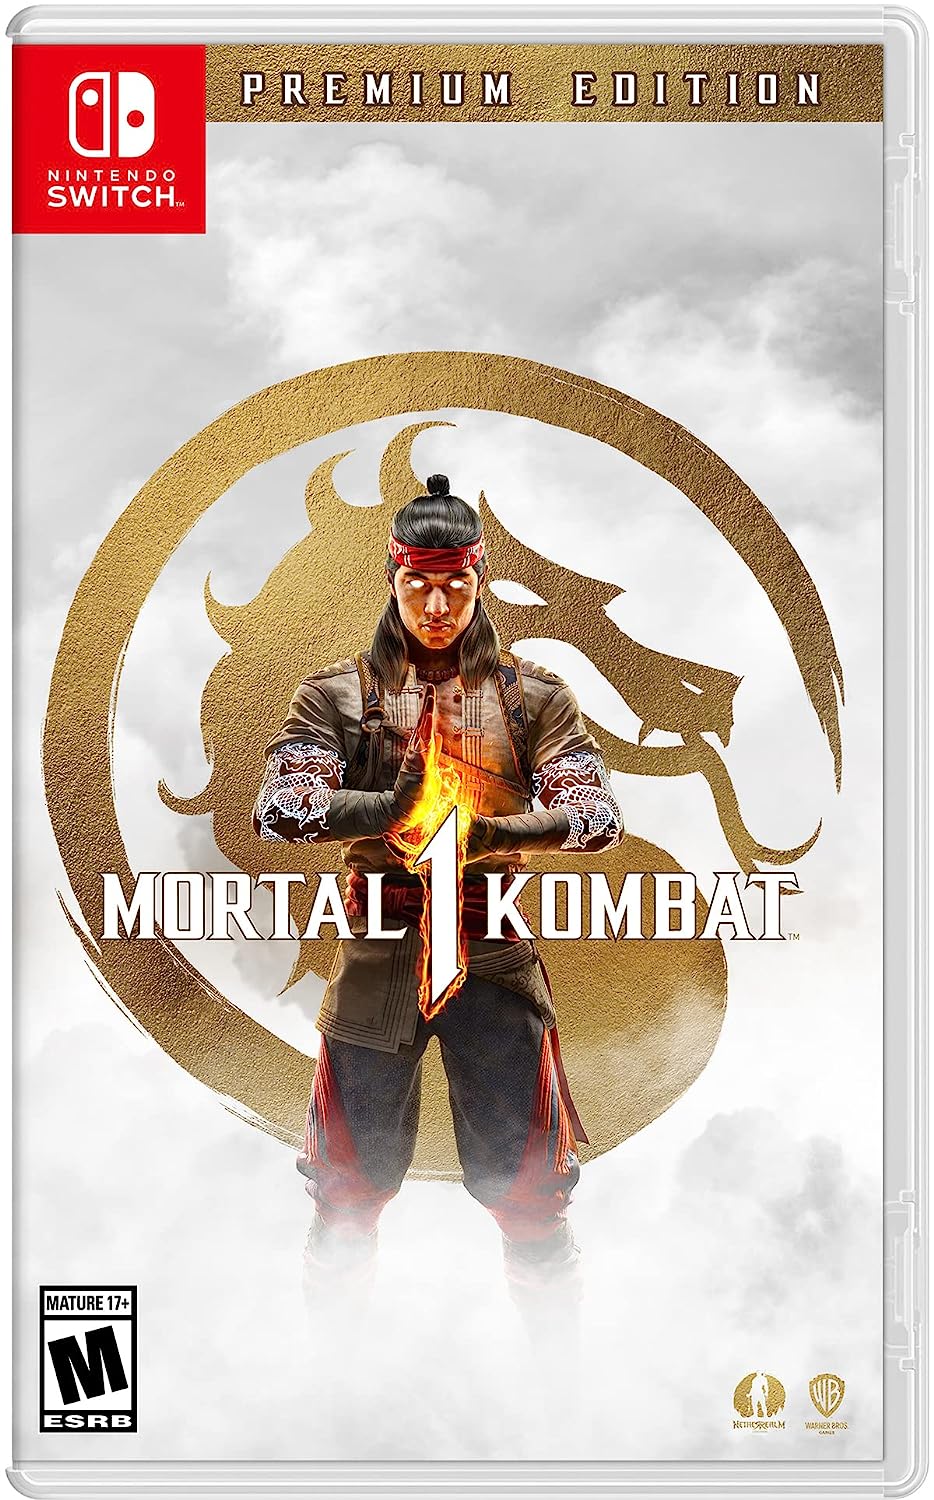 Mortal Kombat 4 [USA] - Nintendo 64 (N64) rom download